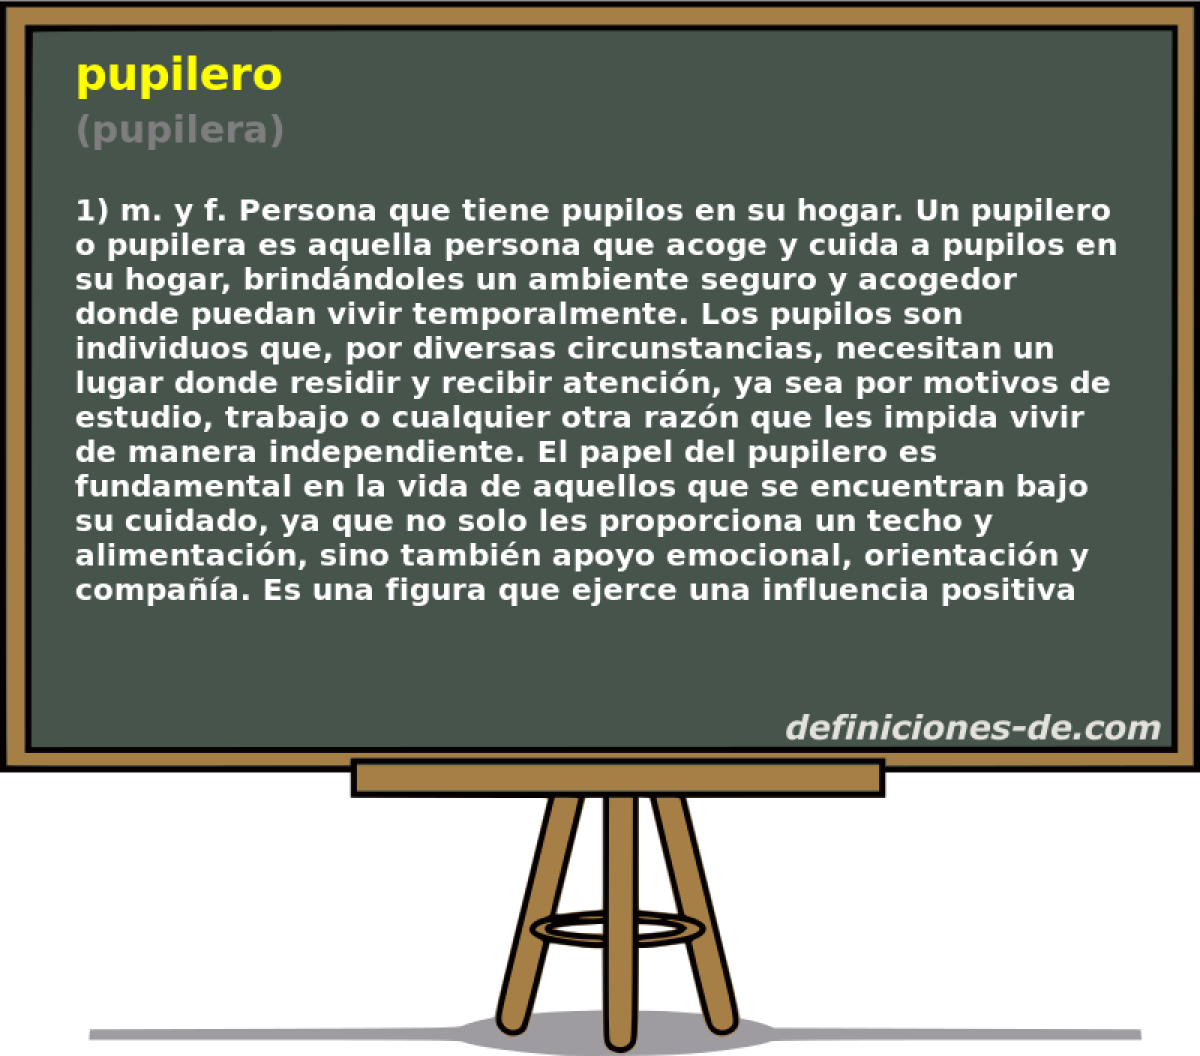 pupilero (pupilera)